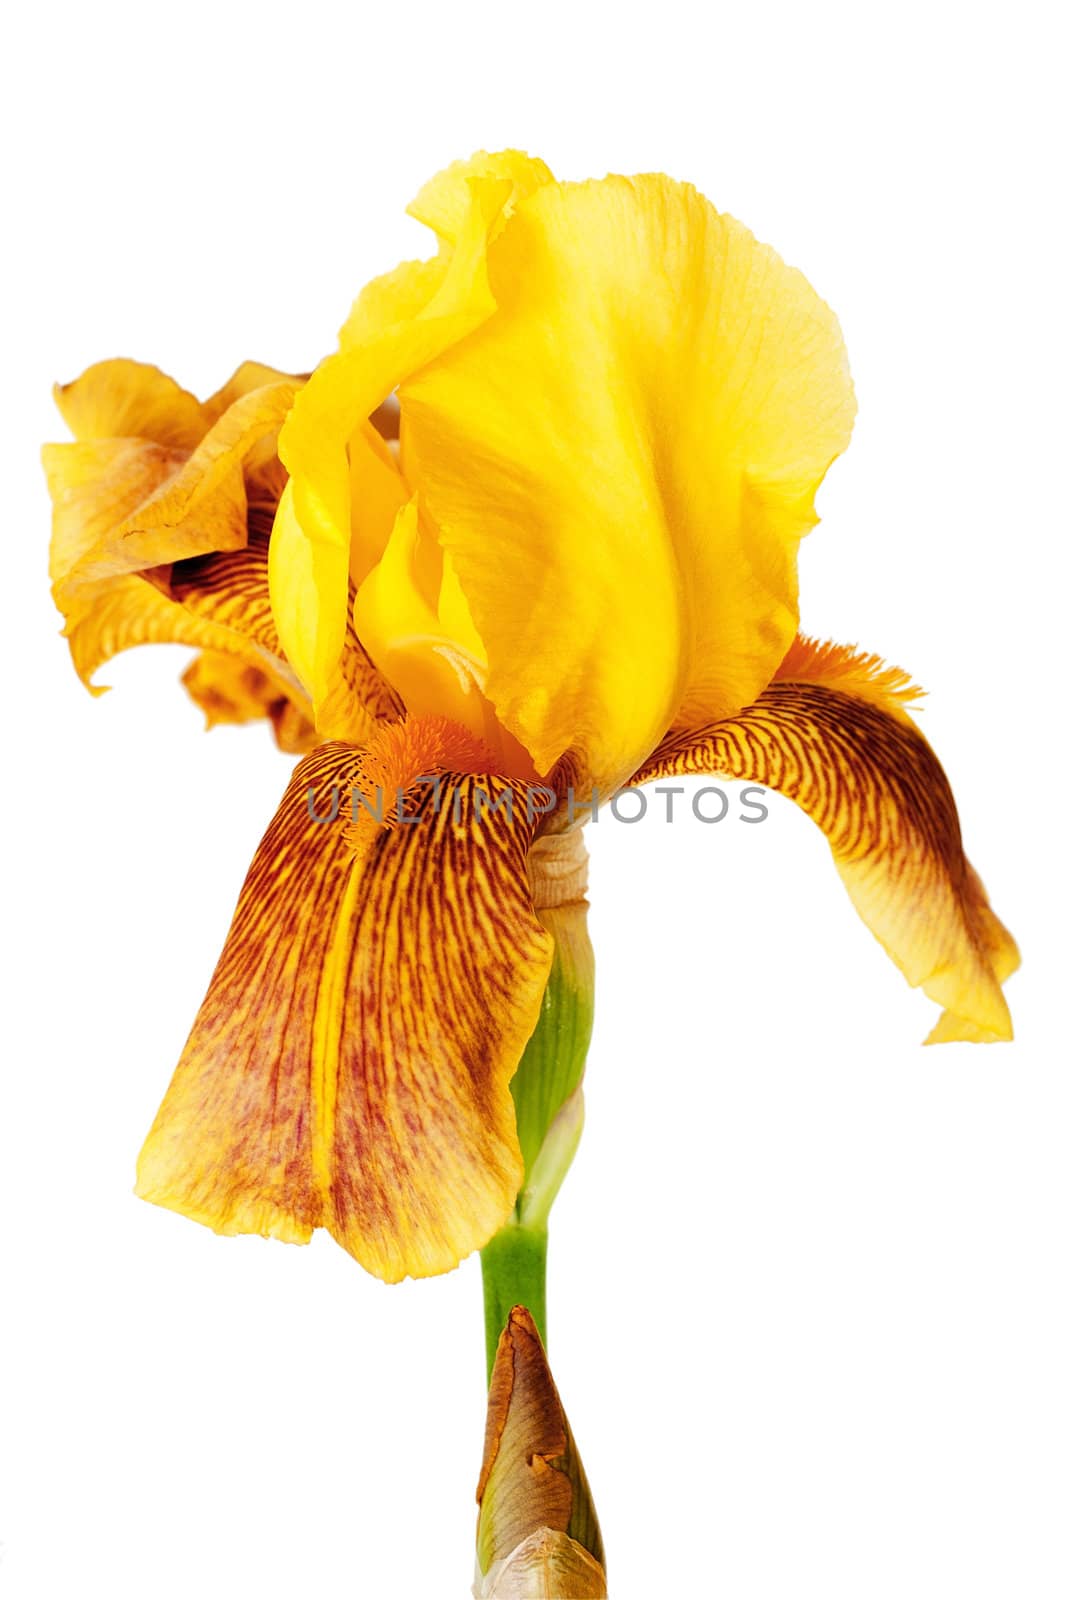 iris yellow flower isolated on white background